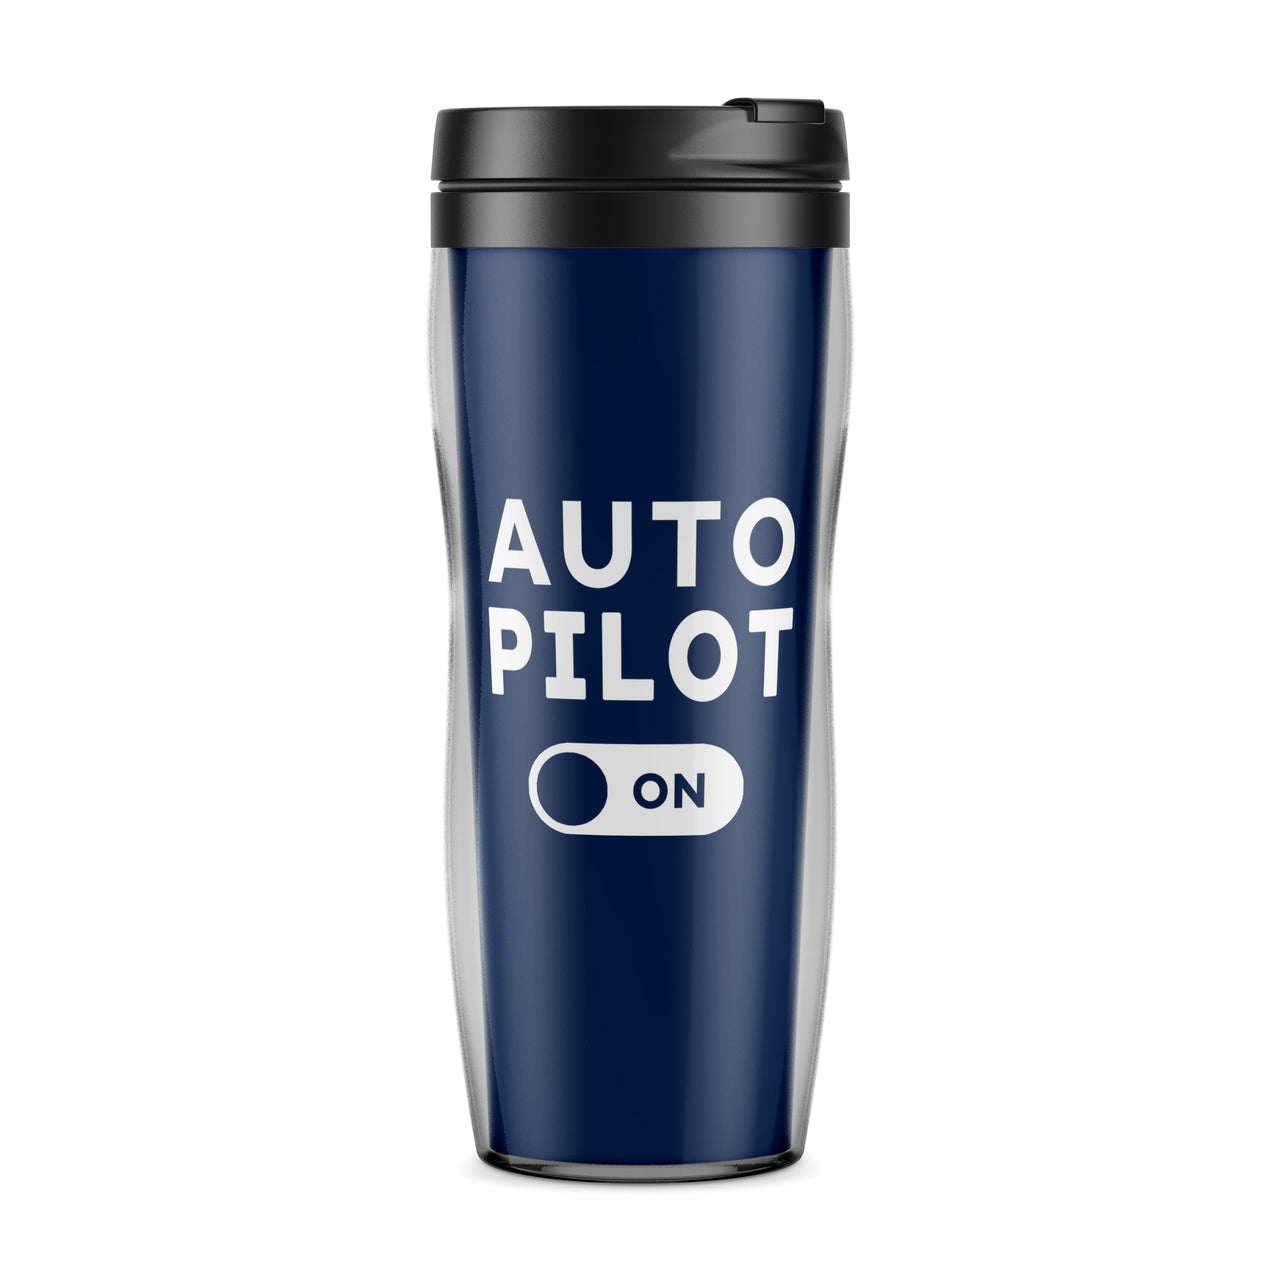 Auto Pilot ON Designed Travel Mugs